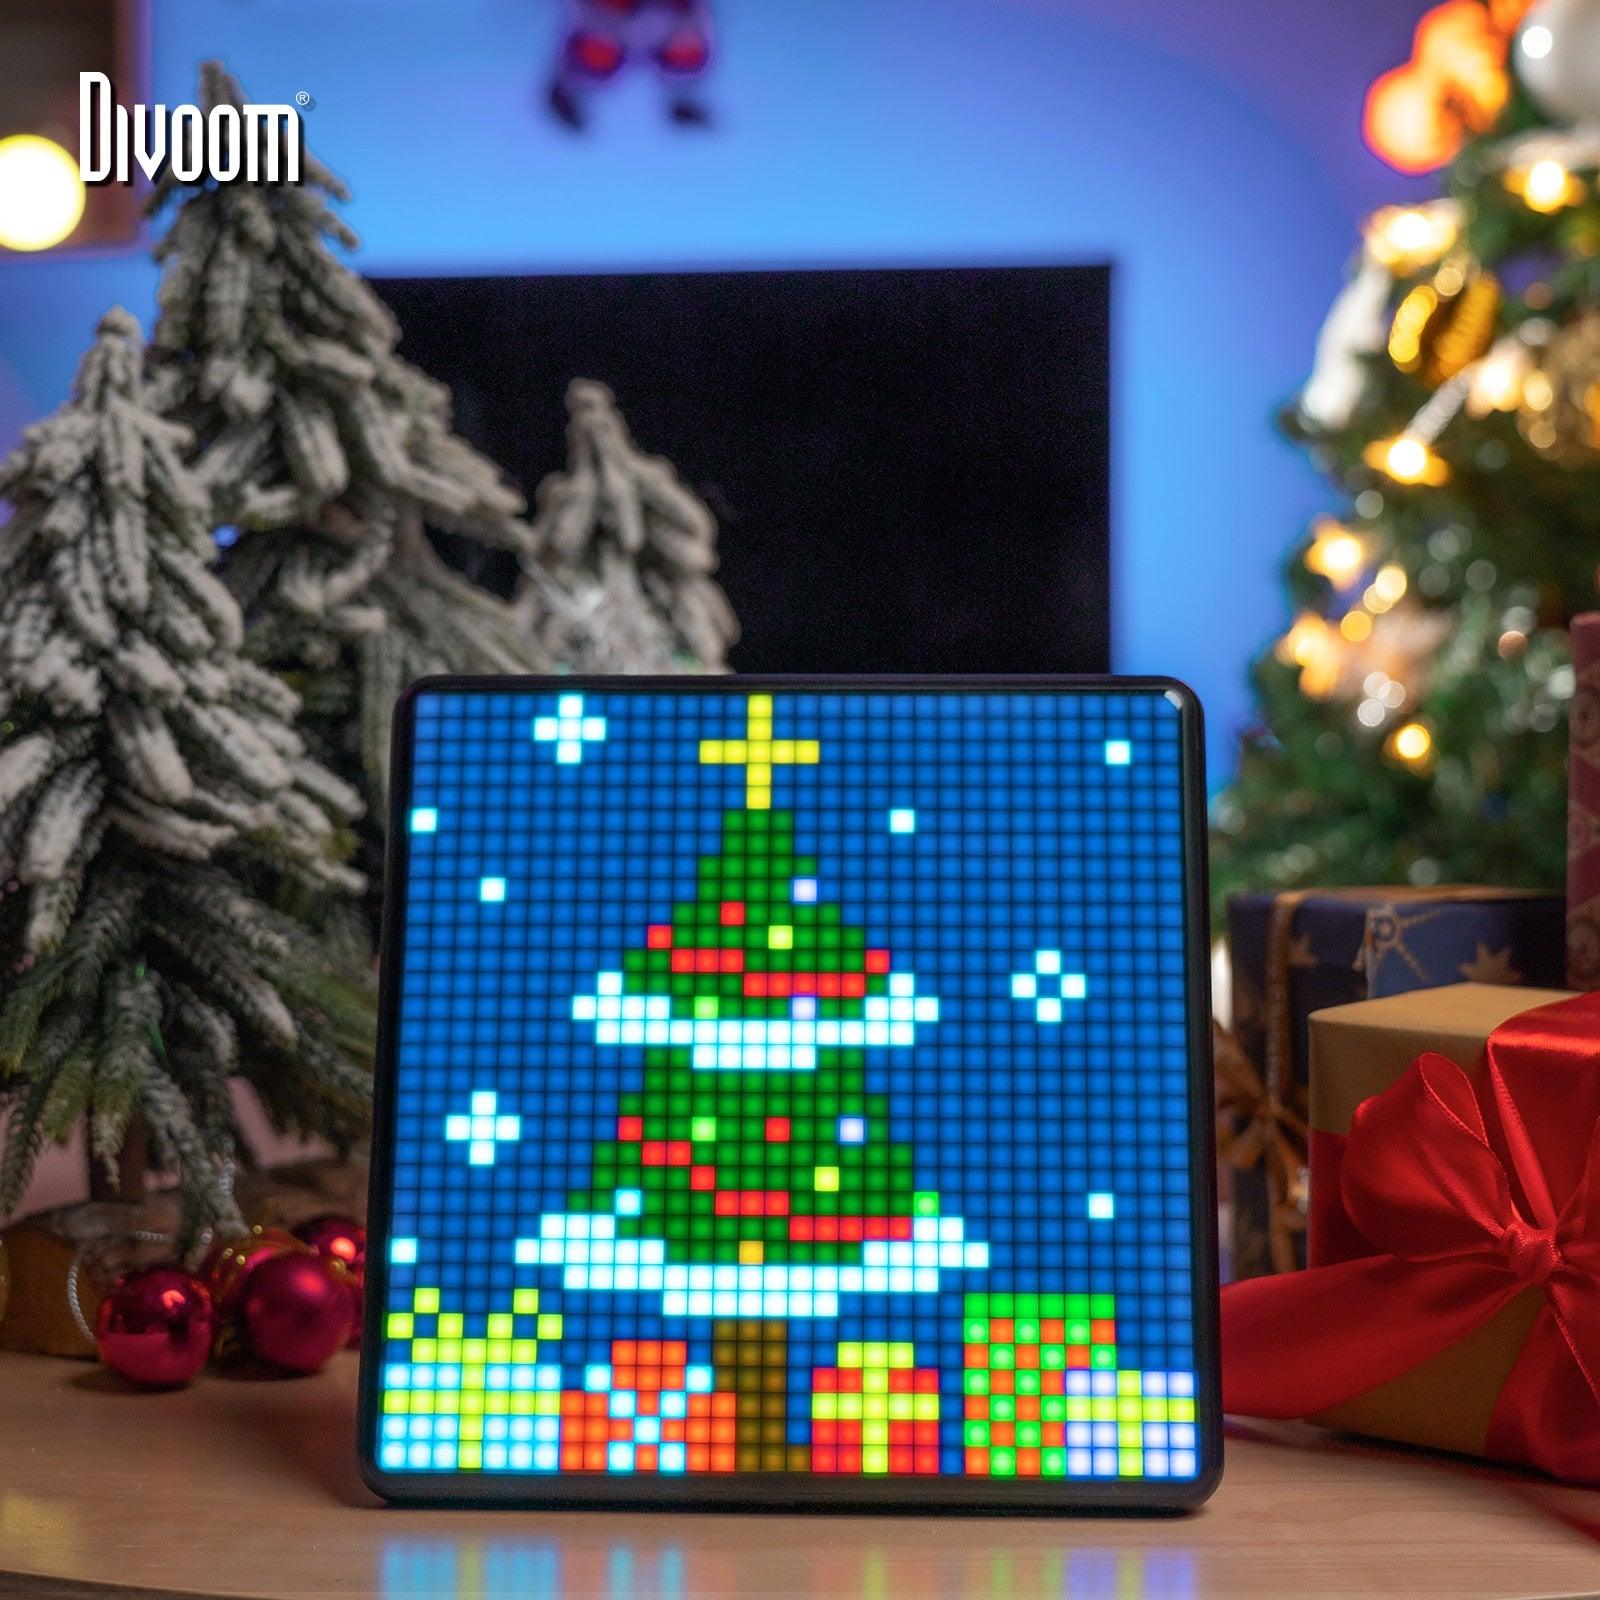 Divoom Pixoo Max Digital Display Frame - Pixel Art and Decorative LED Lighting